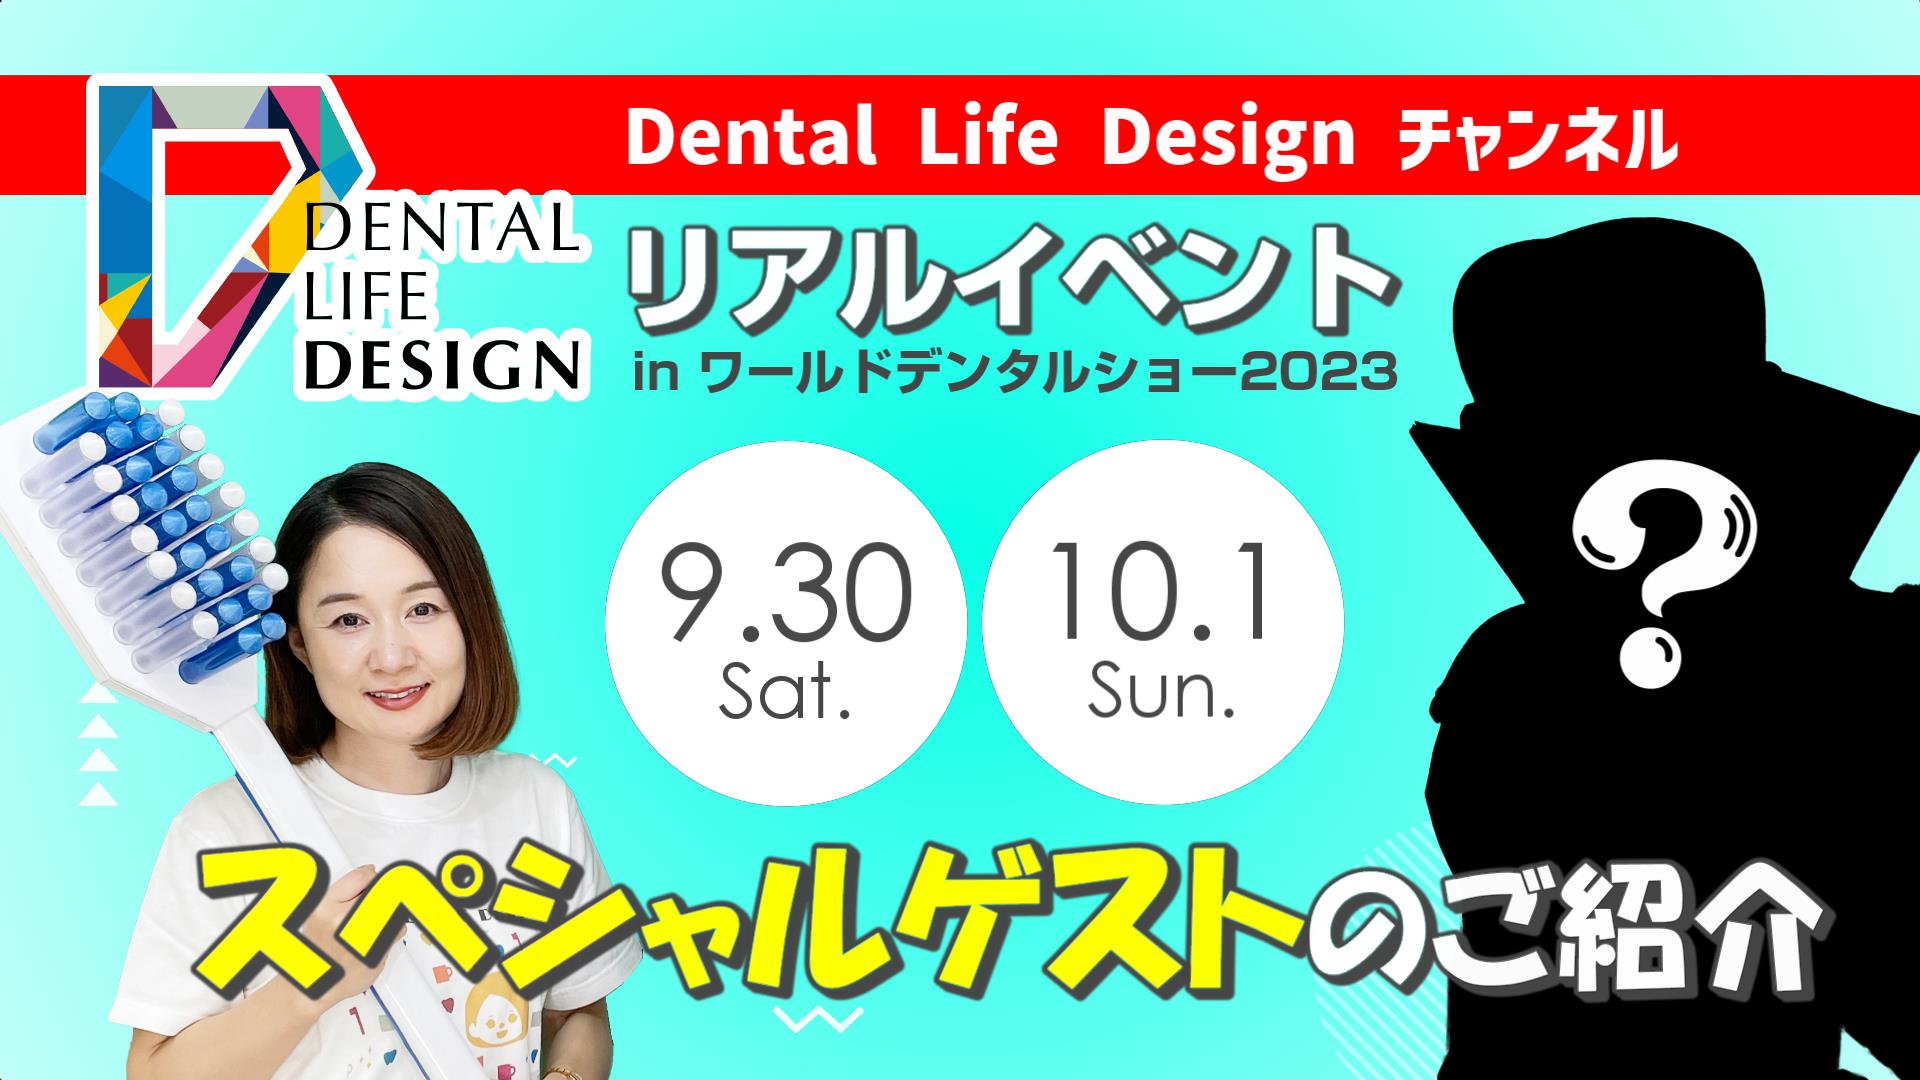 Dental life Design チャンネル リアルイベント in ワールドデンタルショー2023 スペシャルゲストのご紹介